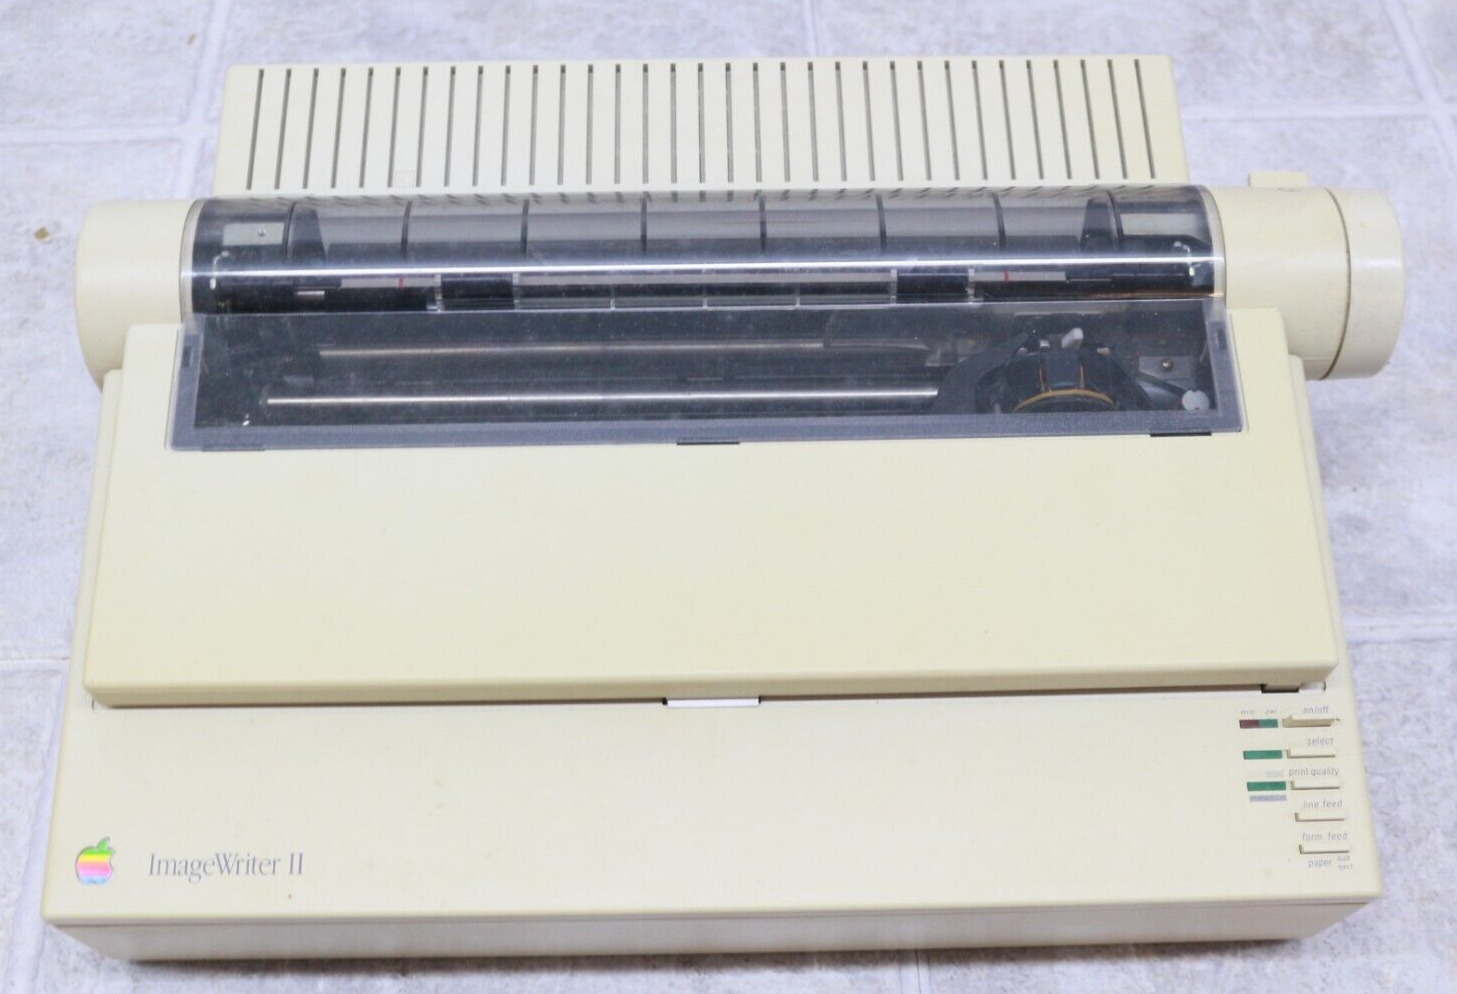 Vintage Apple Image Writer II Printer A9M0320 **NOT TESTED**